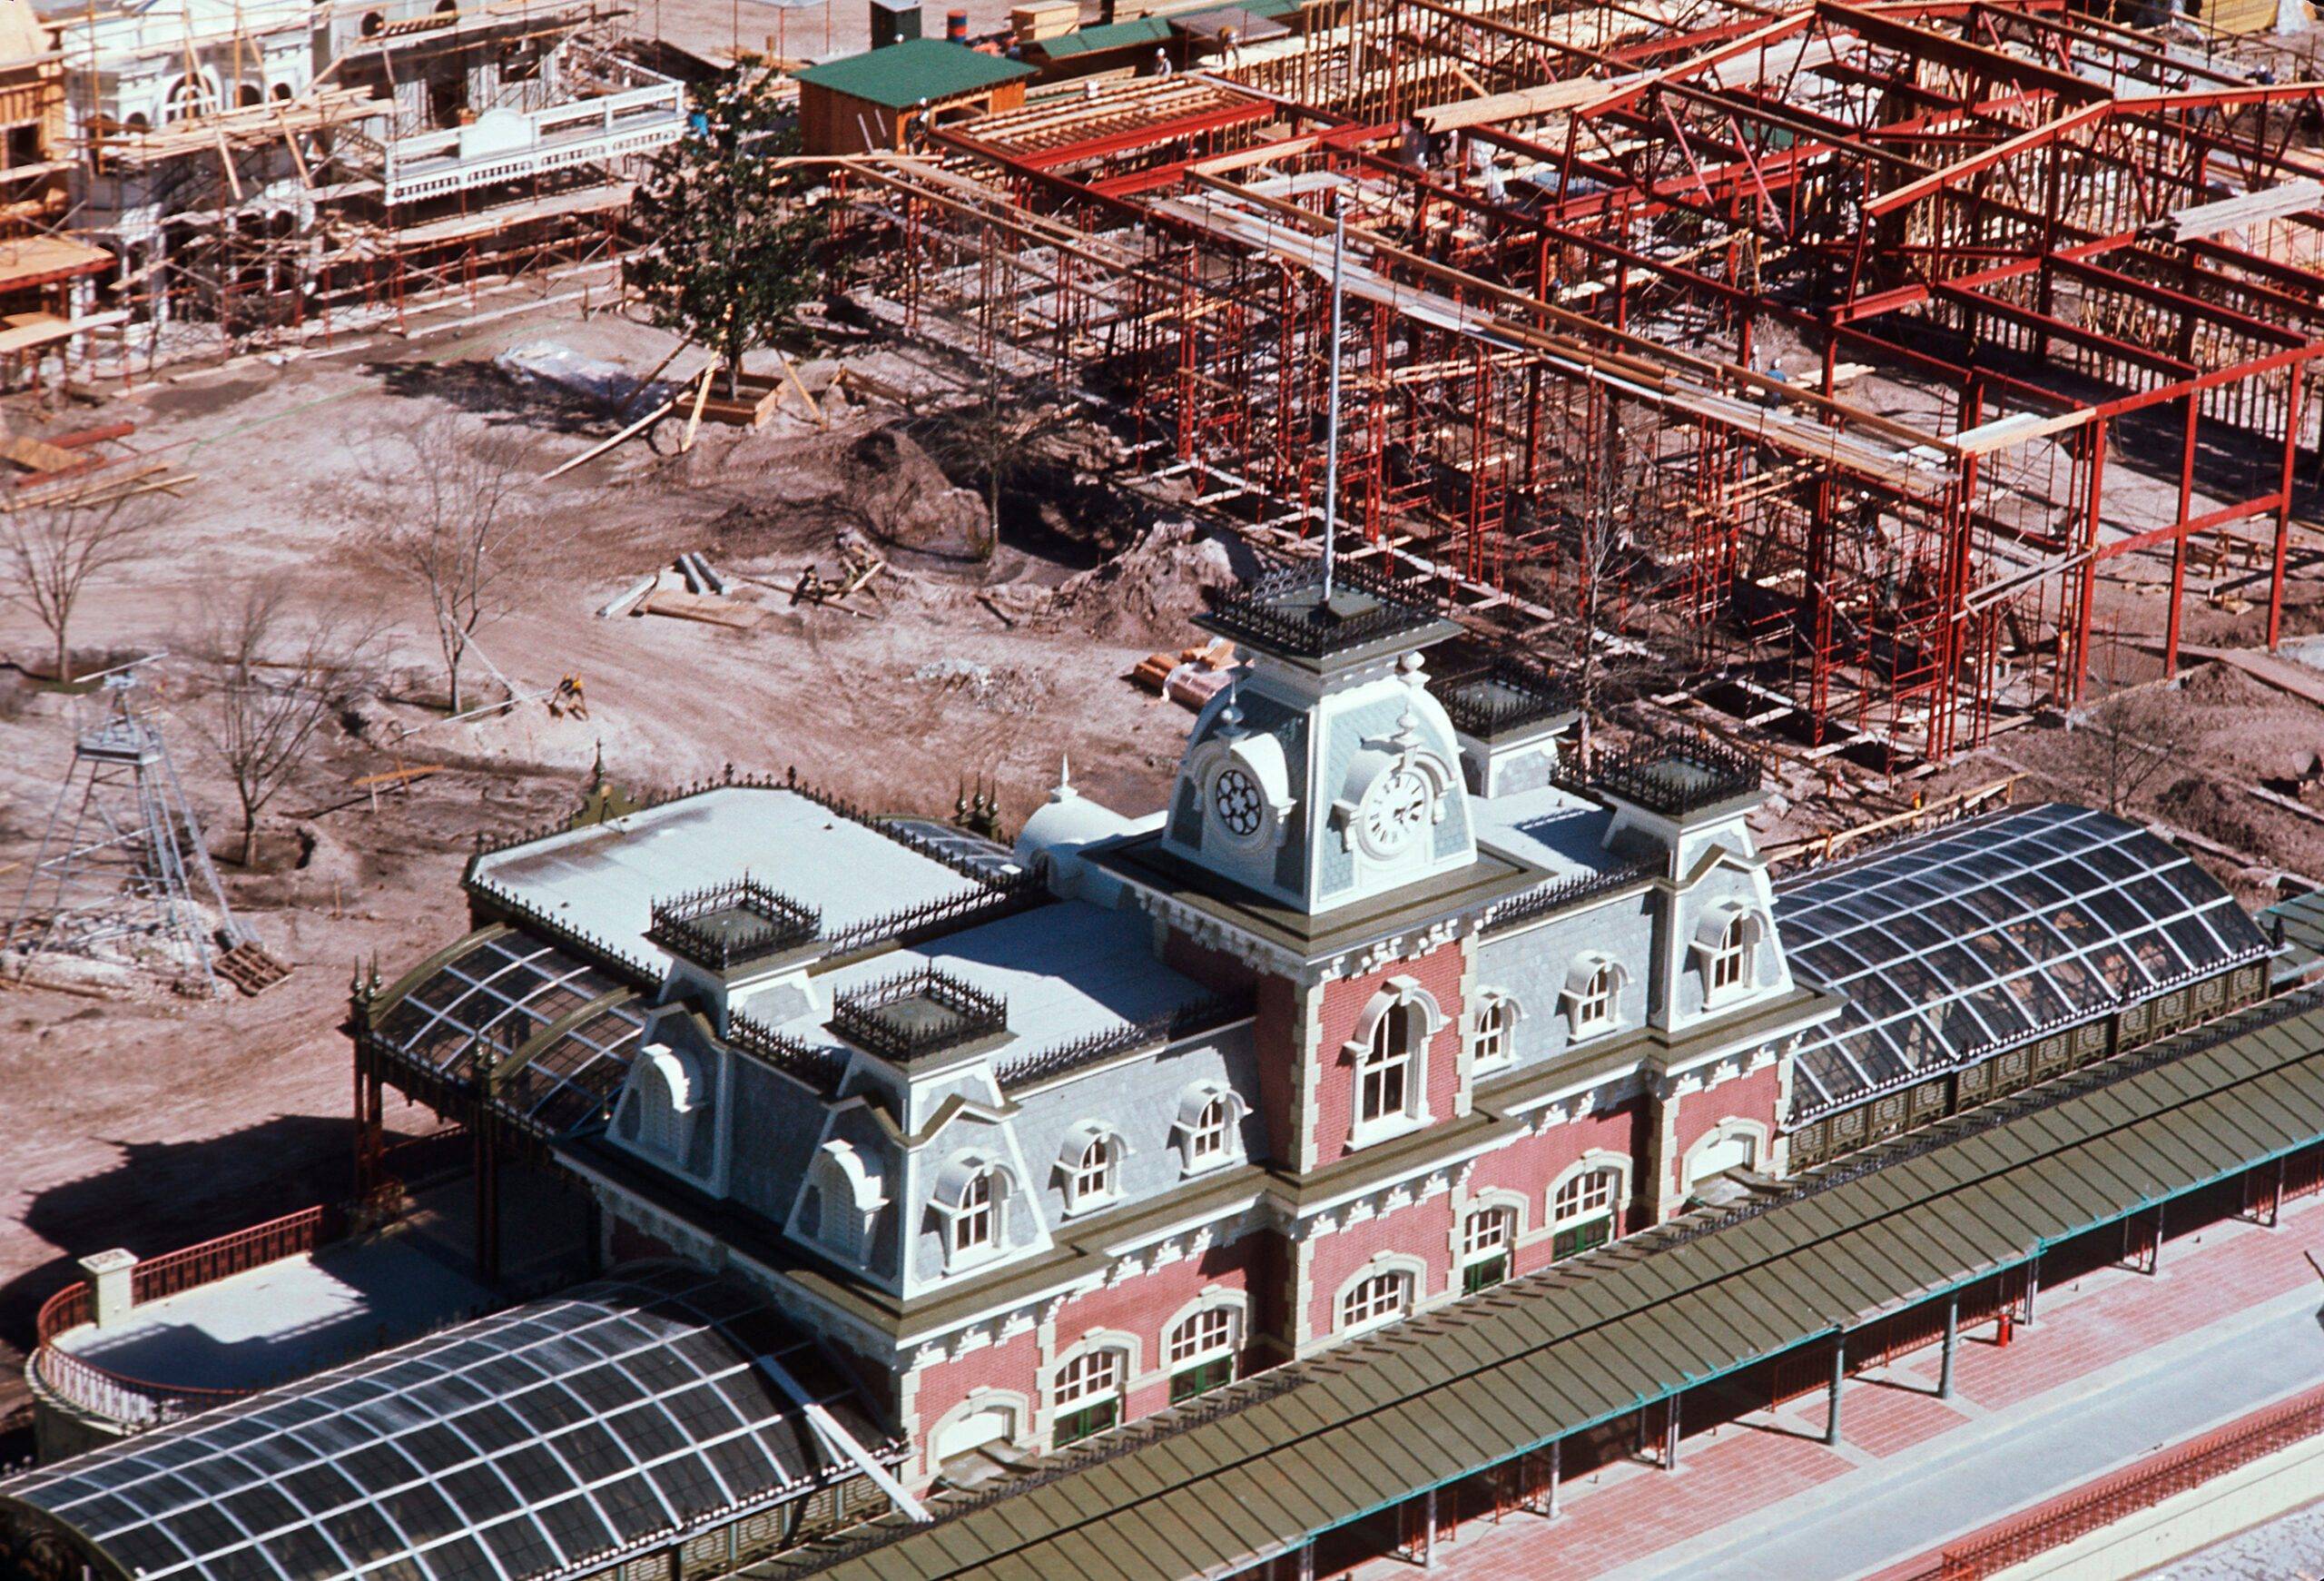 Main Street, U.S.A., under construction at Magic Kingdom Park in 1971 at Walt Disney World Resort